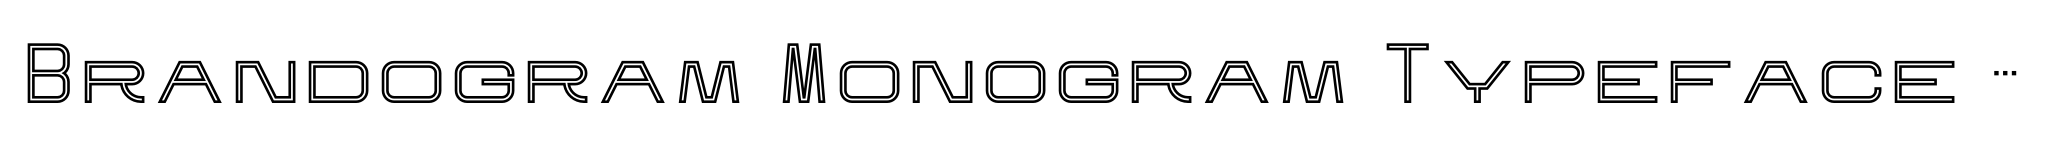 Brandogram Monogram Typeface Stencil One image